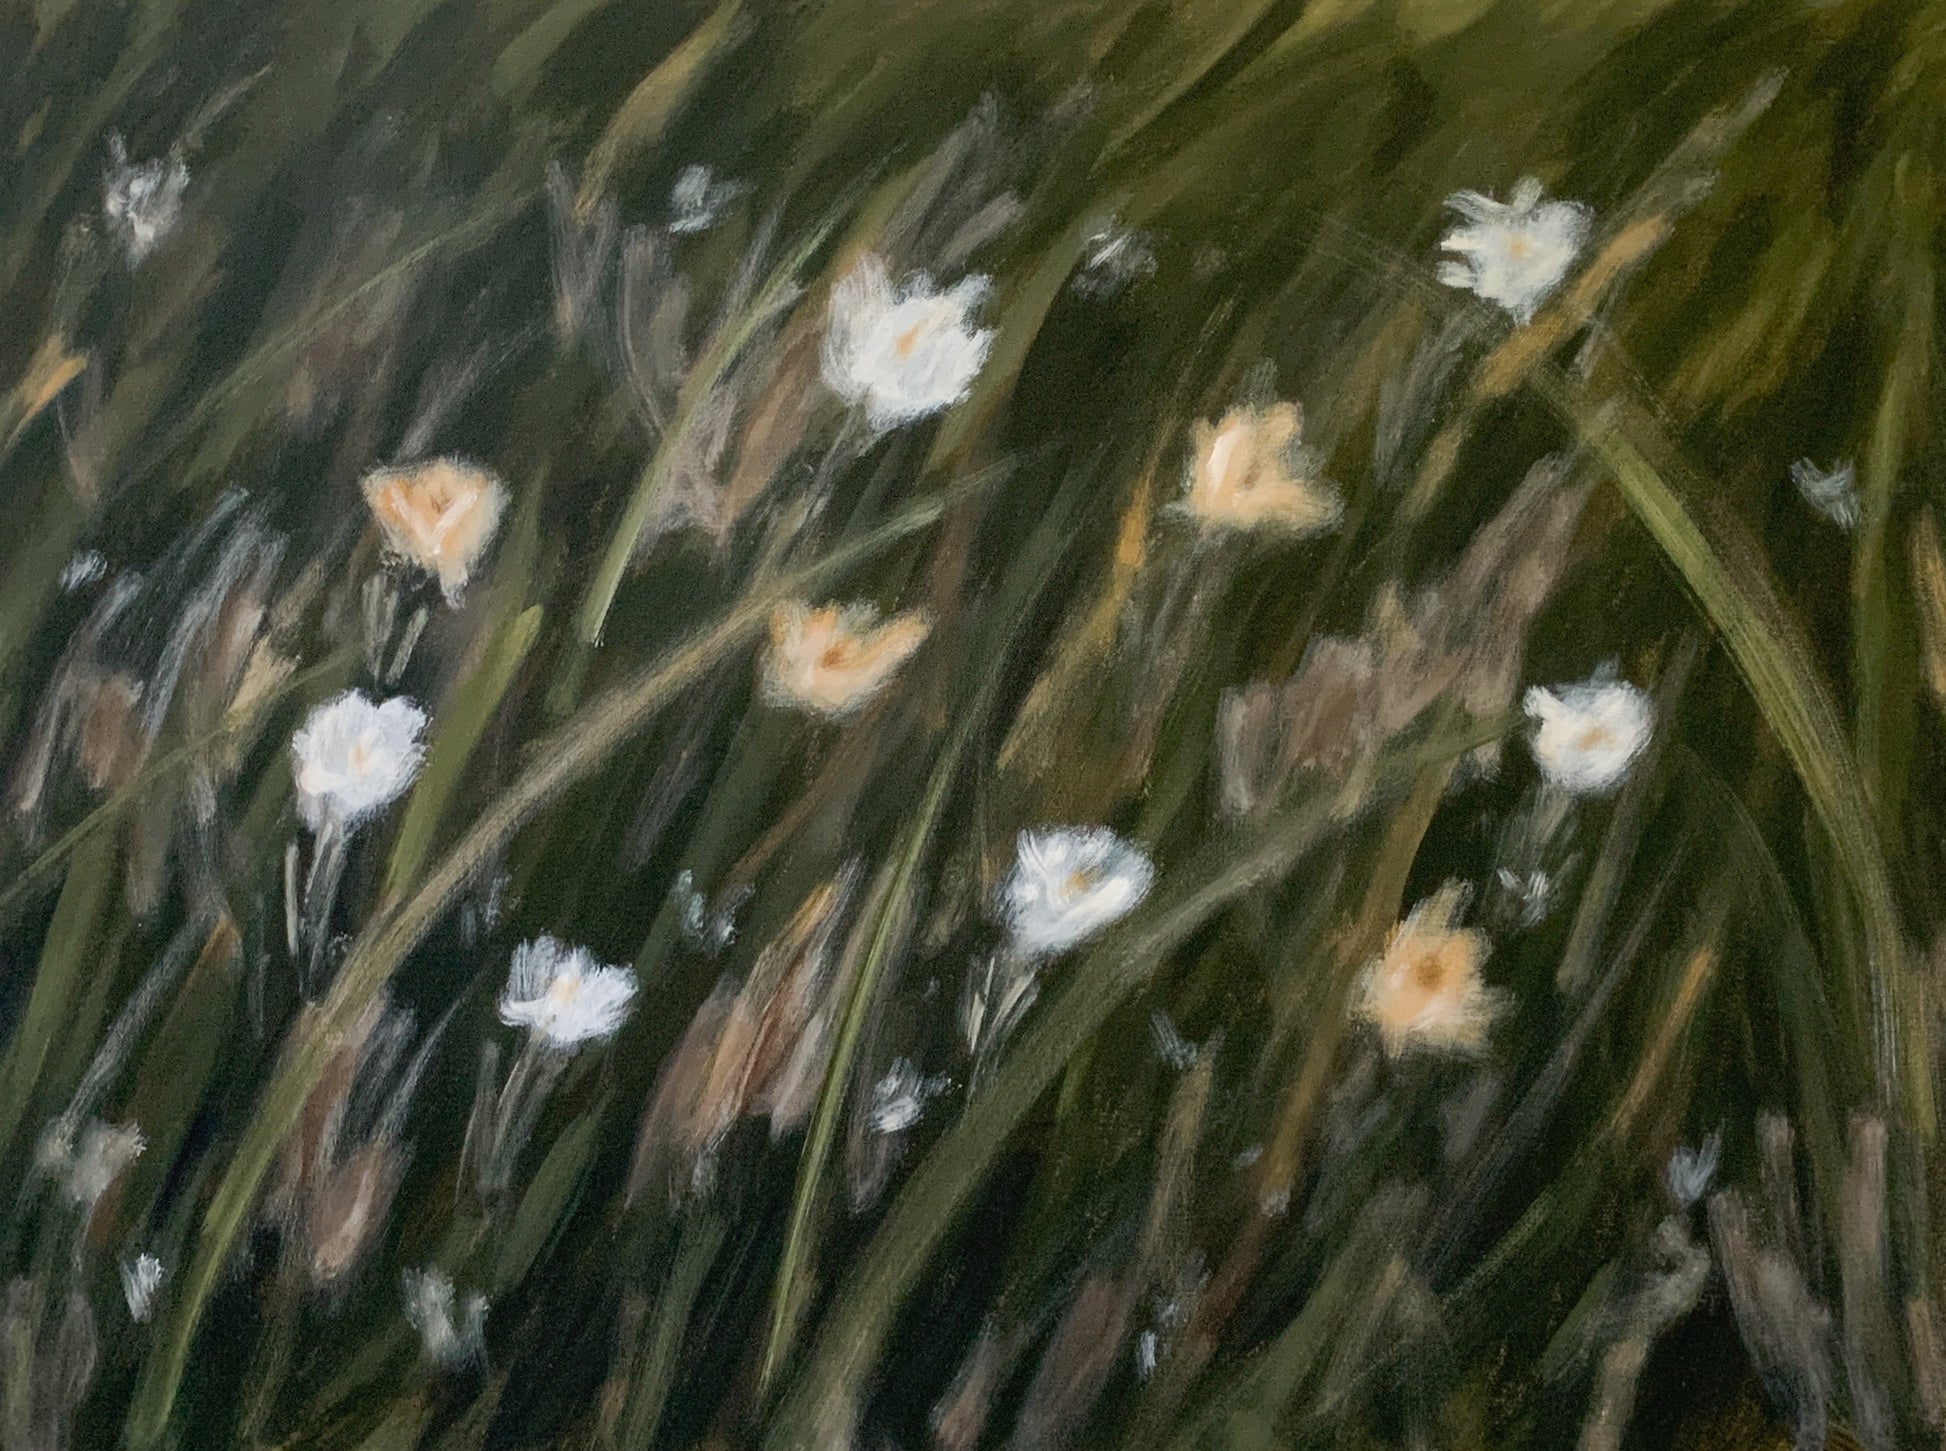 "In the Wildflowers" by Allie Burton